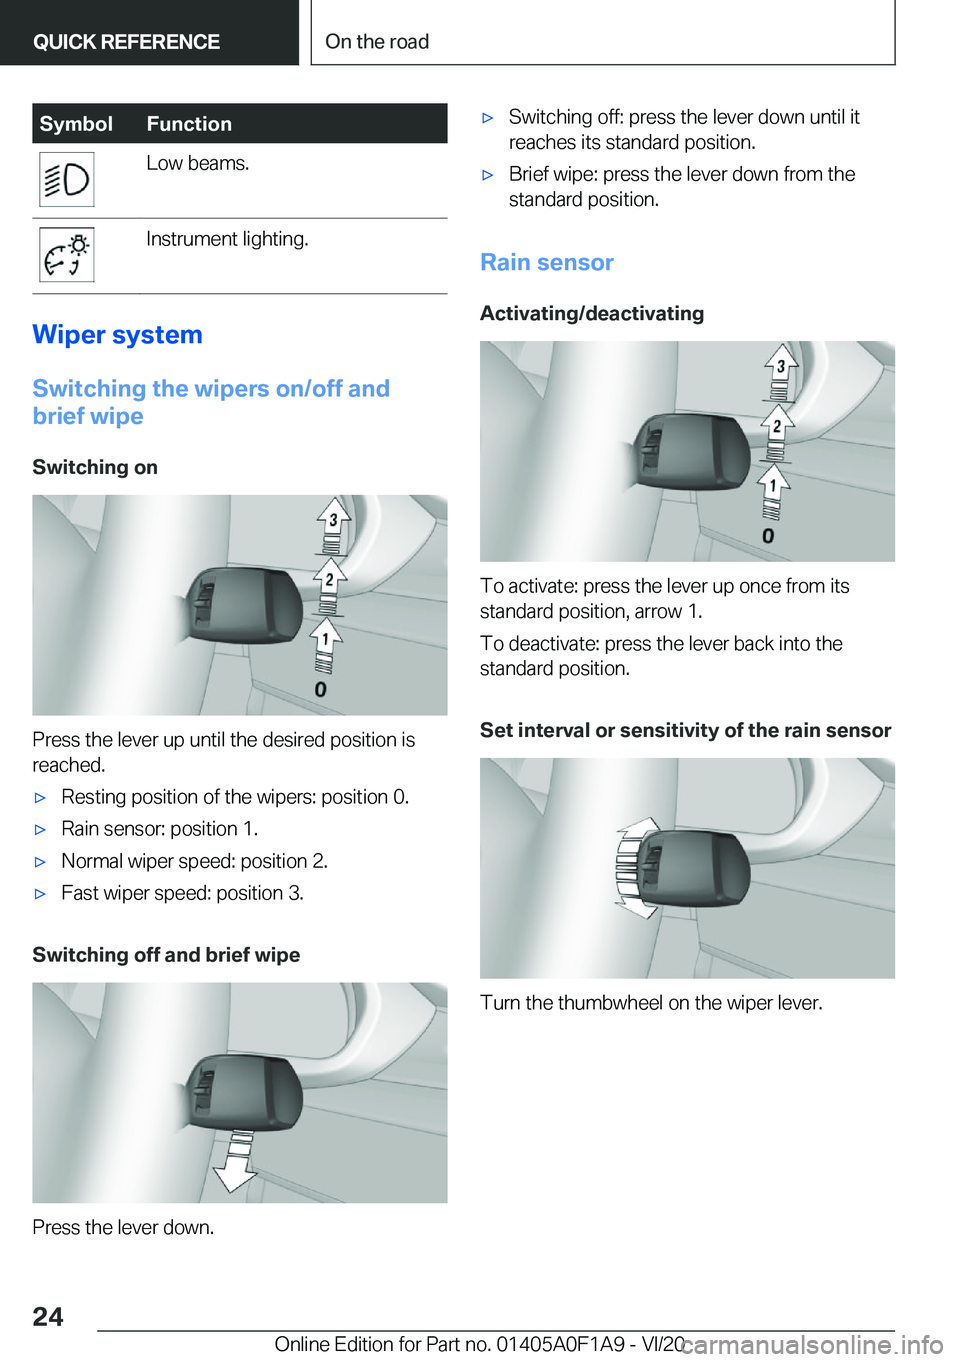 BMW 2 SERIES COUPE 2021 Owners Manual �S�y�m�b�o�l�F�u�n�c�t�i�o�n�L�o�w��b�e�a�m�s�.�I�n�s�t�r�u�m�e�n�t��l�i�g�h�t�i�n�g�.
�W�i�p�e�r��s�y�s�t�e�m
�S�w�i�t�c�h�i�n�g��t�h�e��w�i�p�e�r�s��o�n�/�o�f�f��a�n�d
�b�r�i�e�f��w�i�p�e
�S